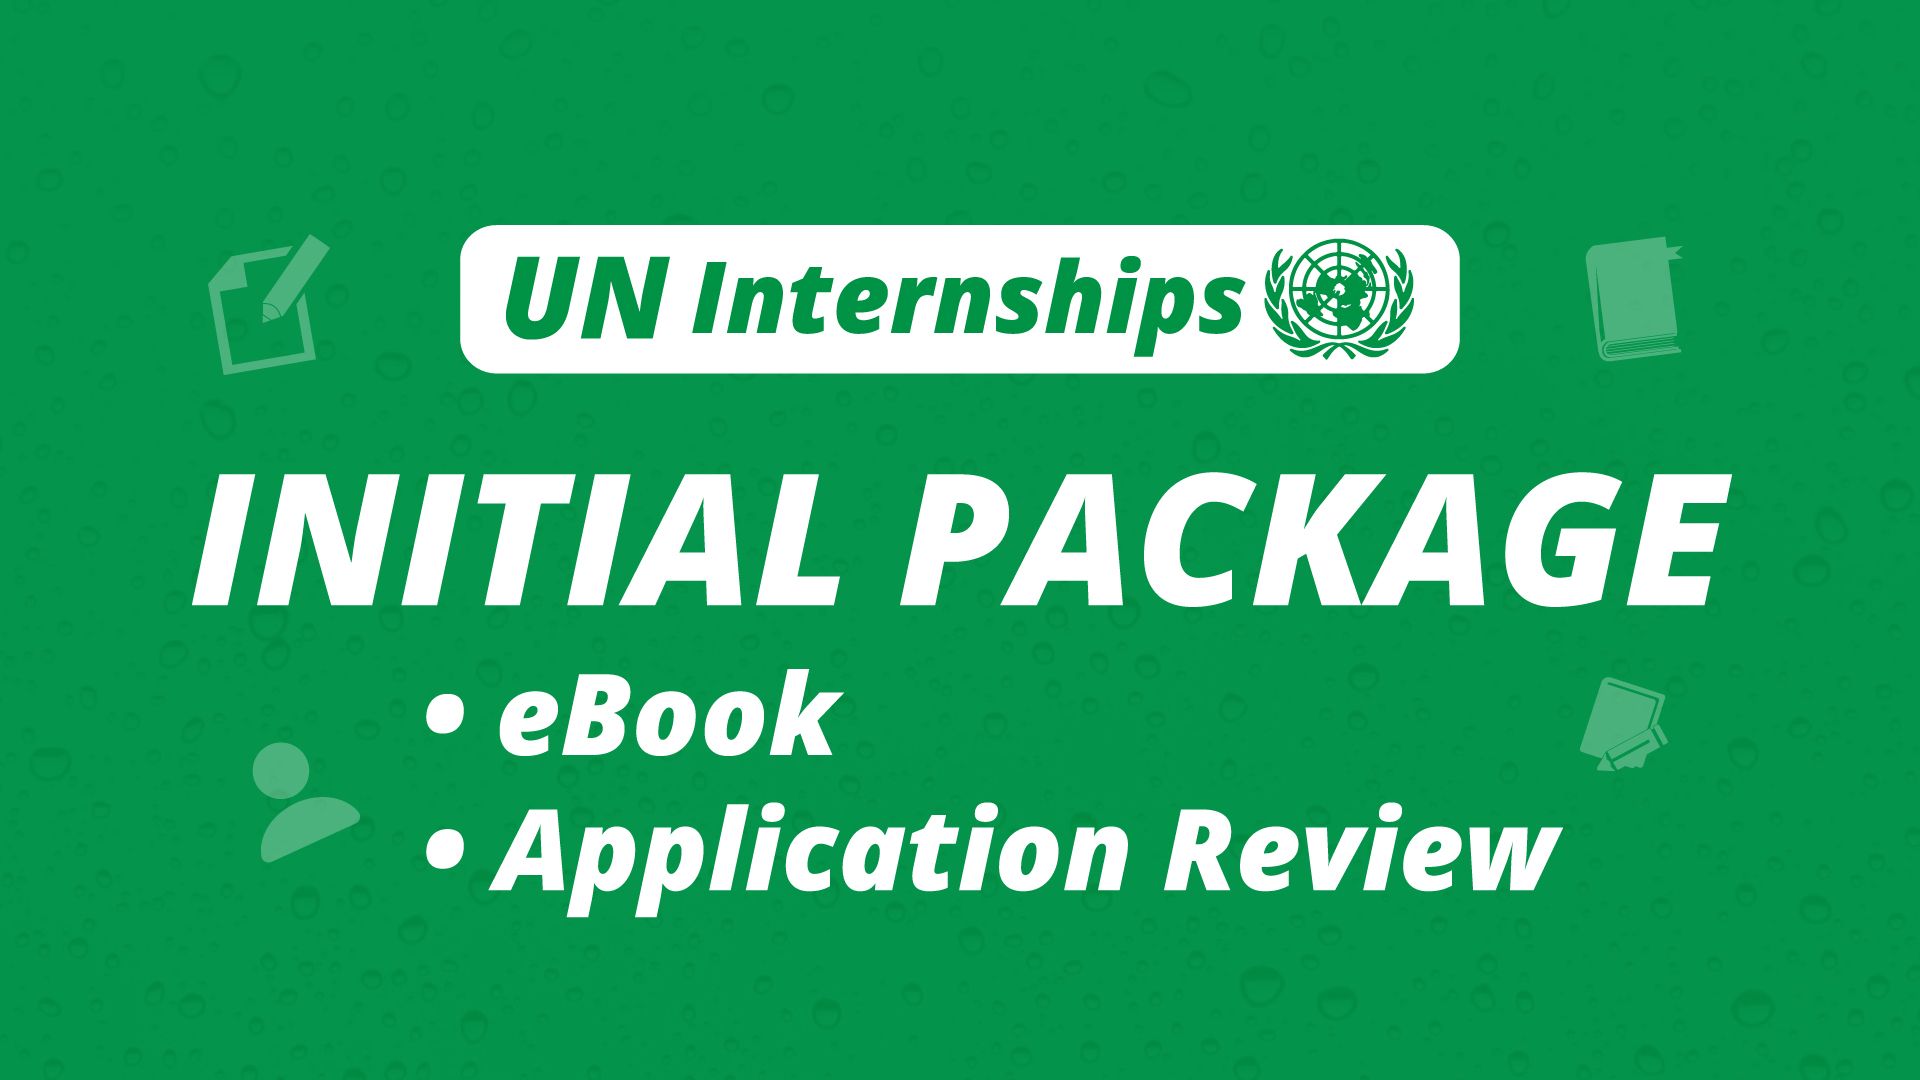 UN-Internships-Initial-Package